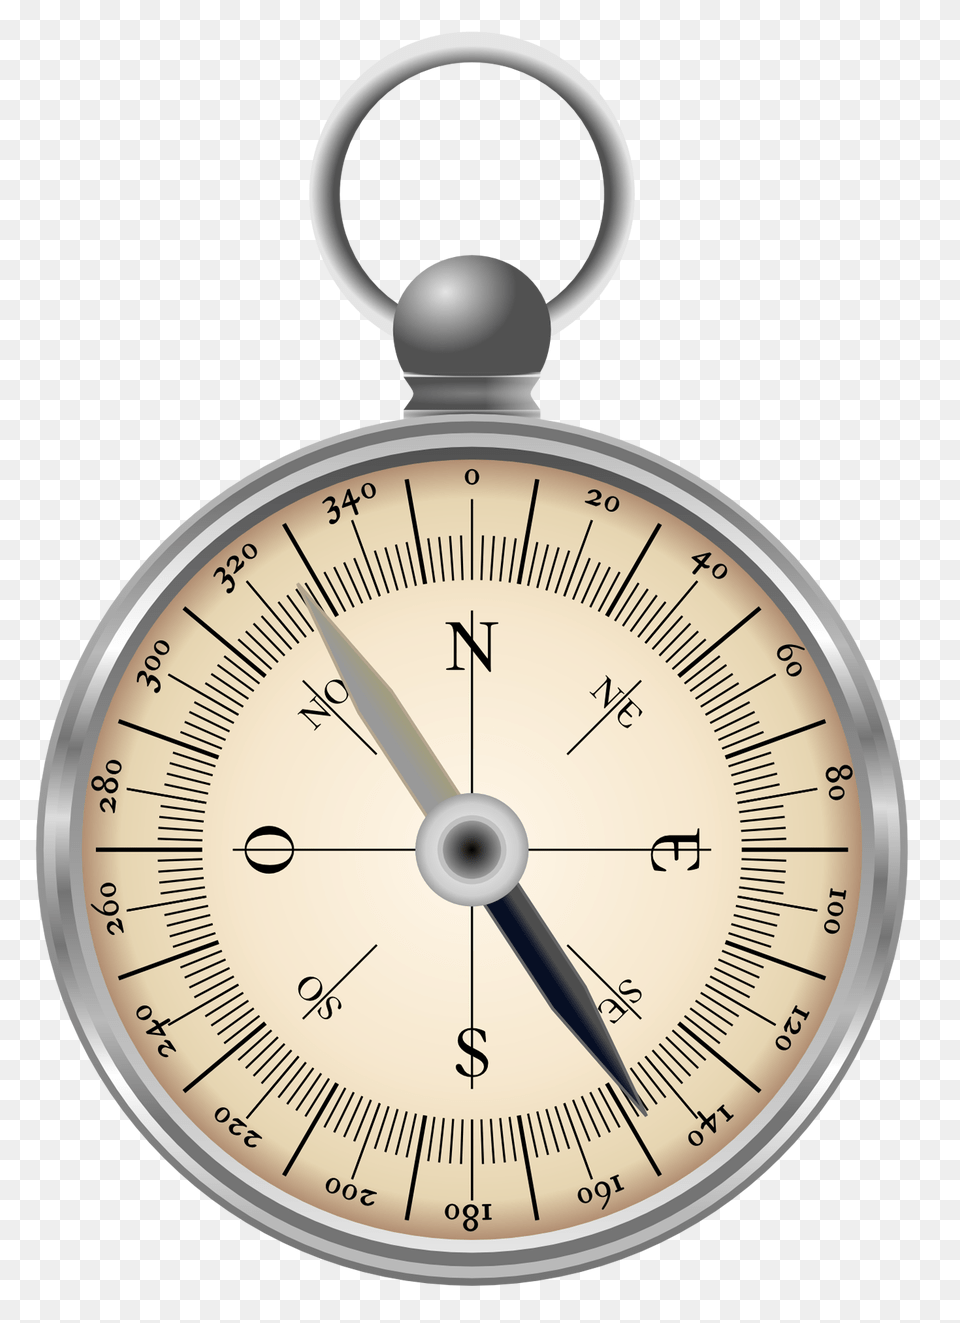 Pngpix Com Compass Image Free Transparent Png